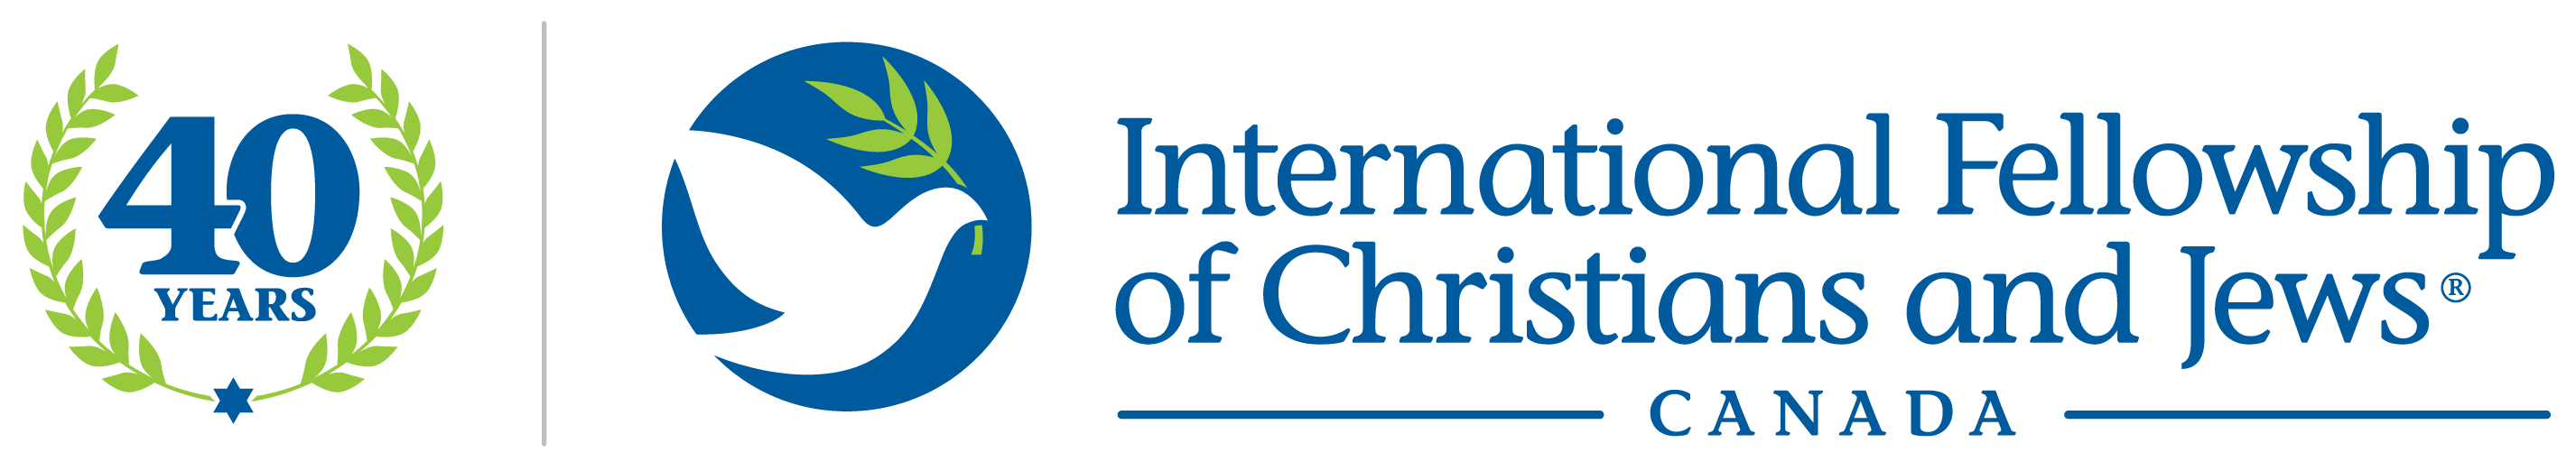 International Fellowship of Christians and Jews - Canada Logo